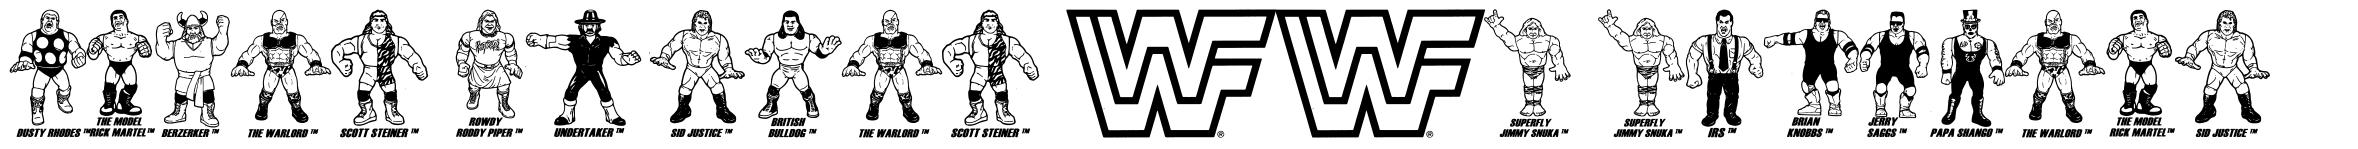 Retro Hasbro WWF Figures písmo